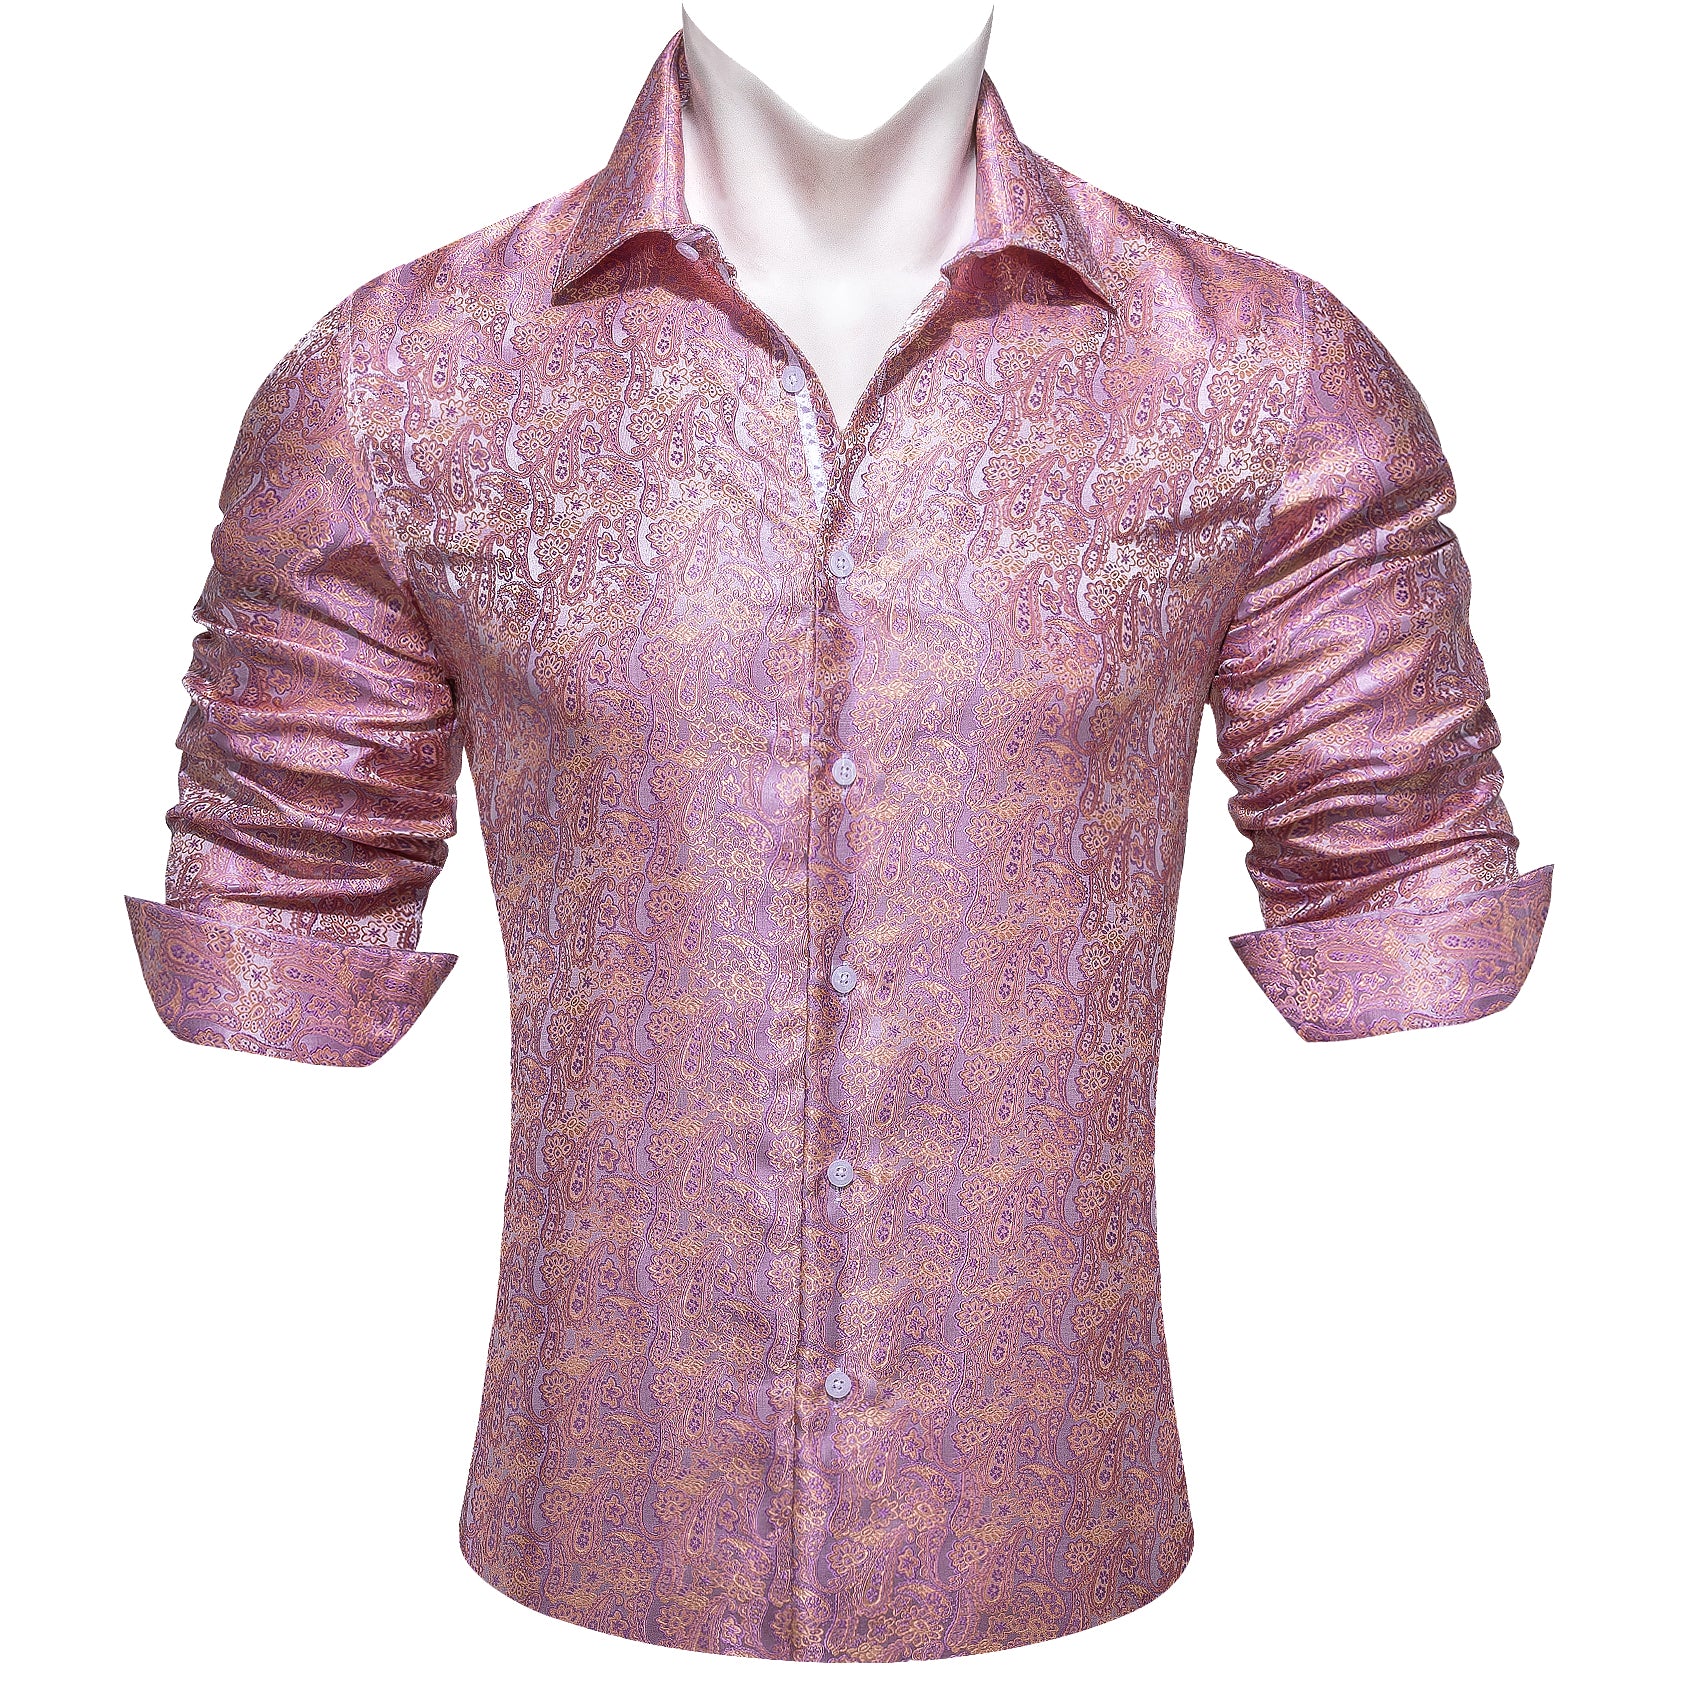 Barry.wang Pink Purple Paisley Silk Men's Shirt